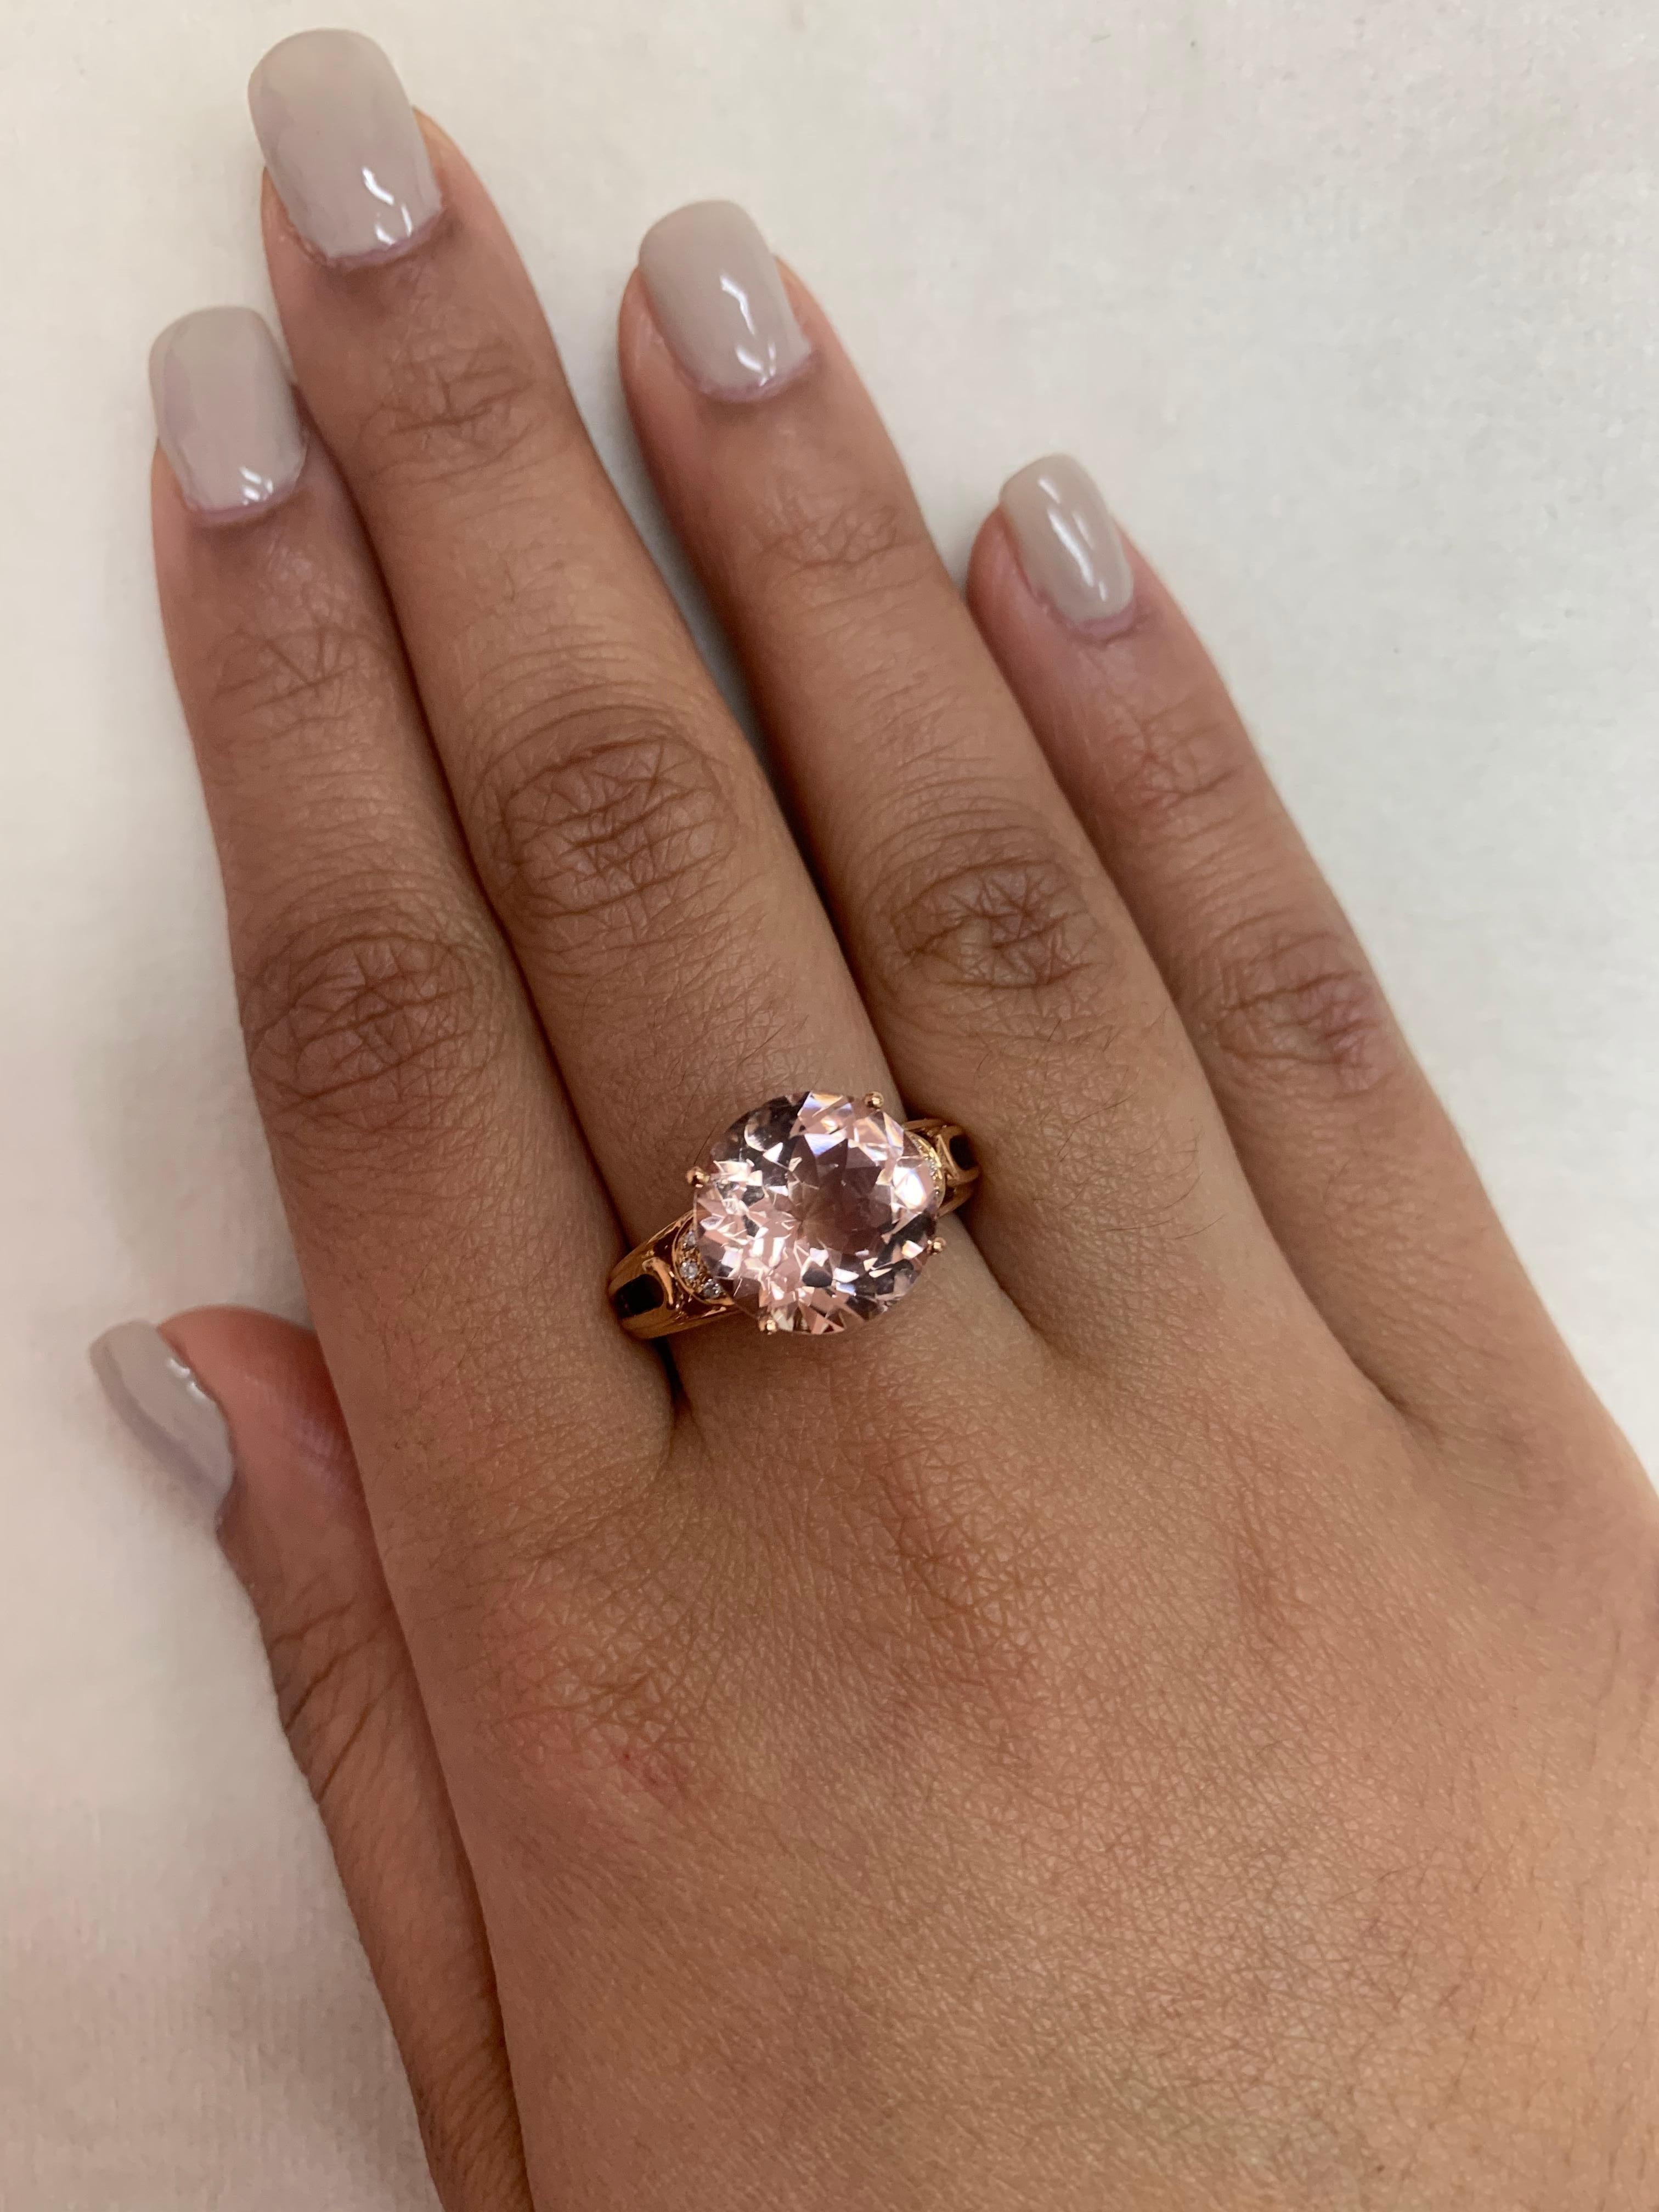 5.9 carat diamond ring